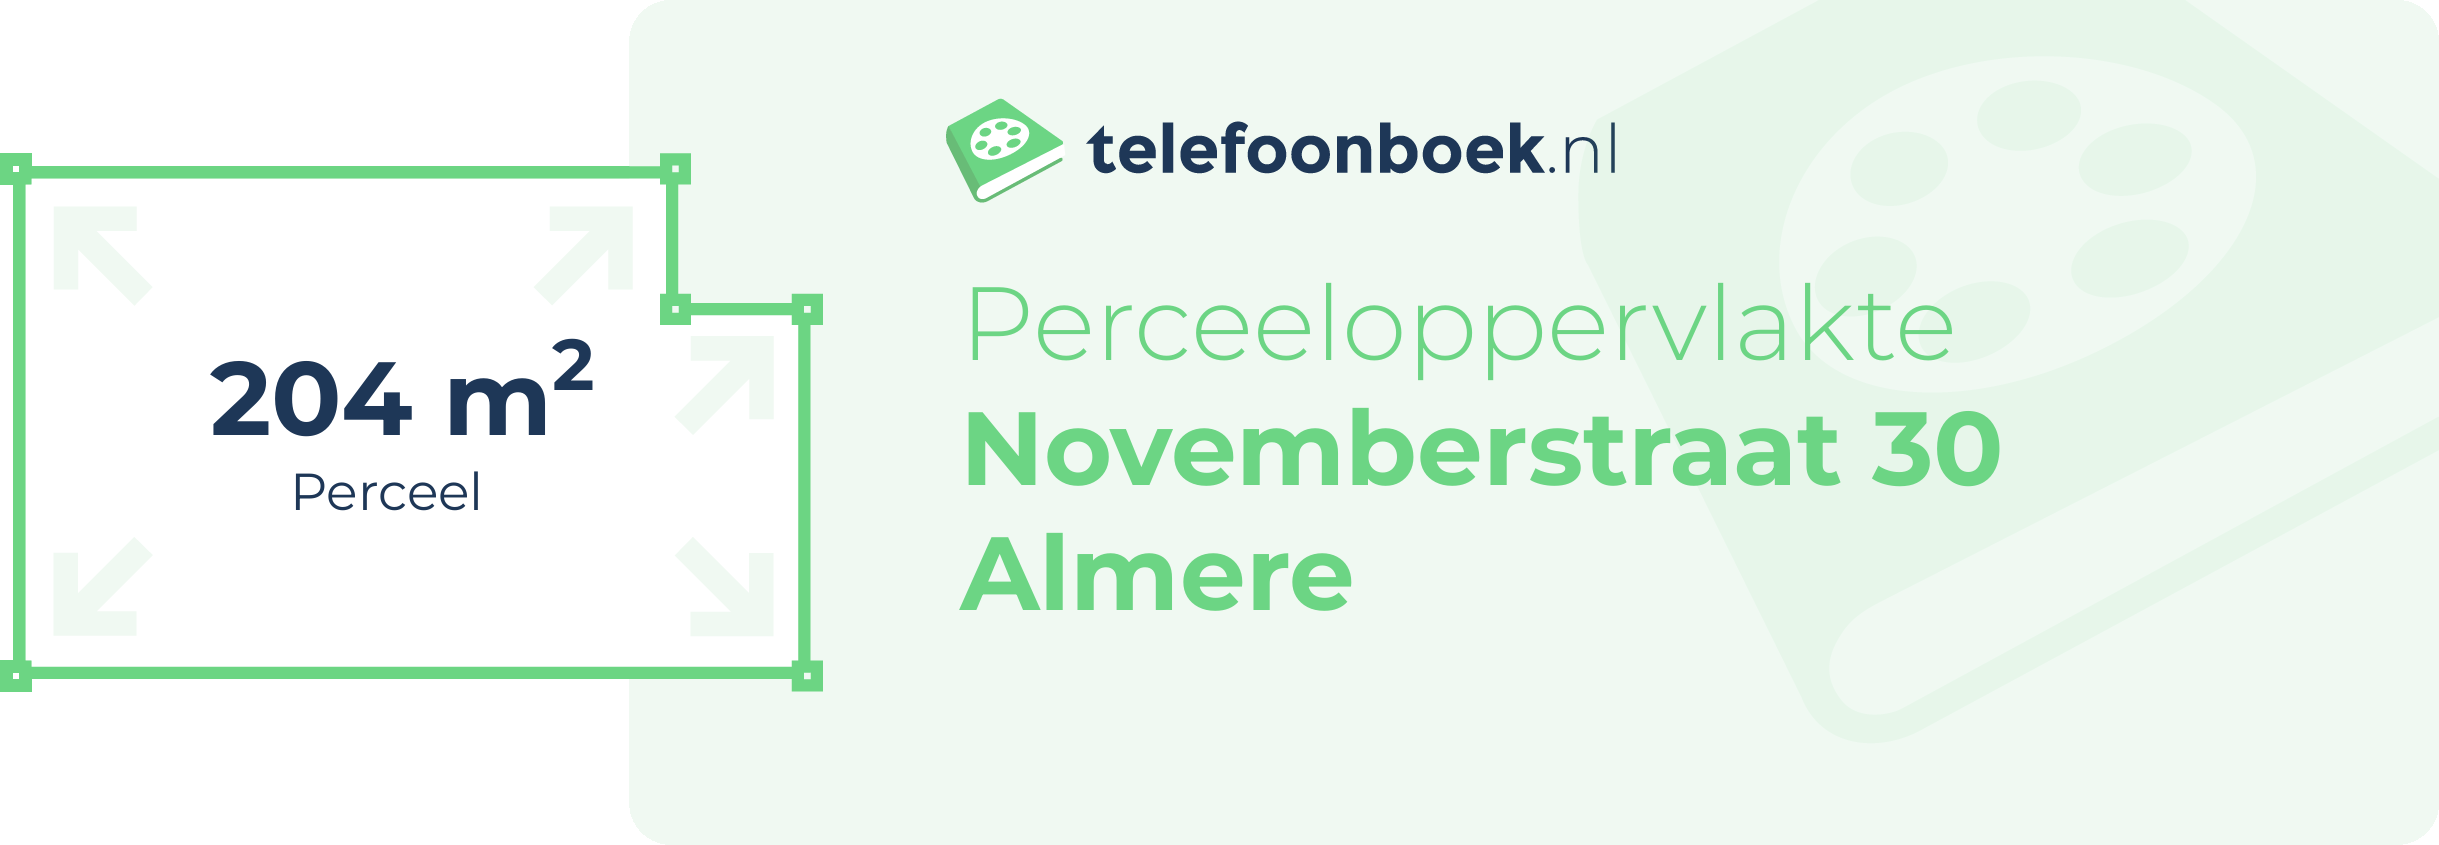 Perceeloppervlakte Novemberstraat 30 Almere